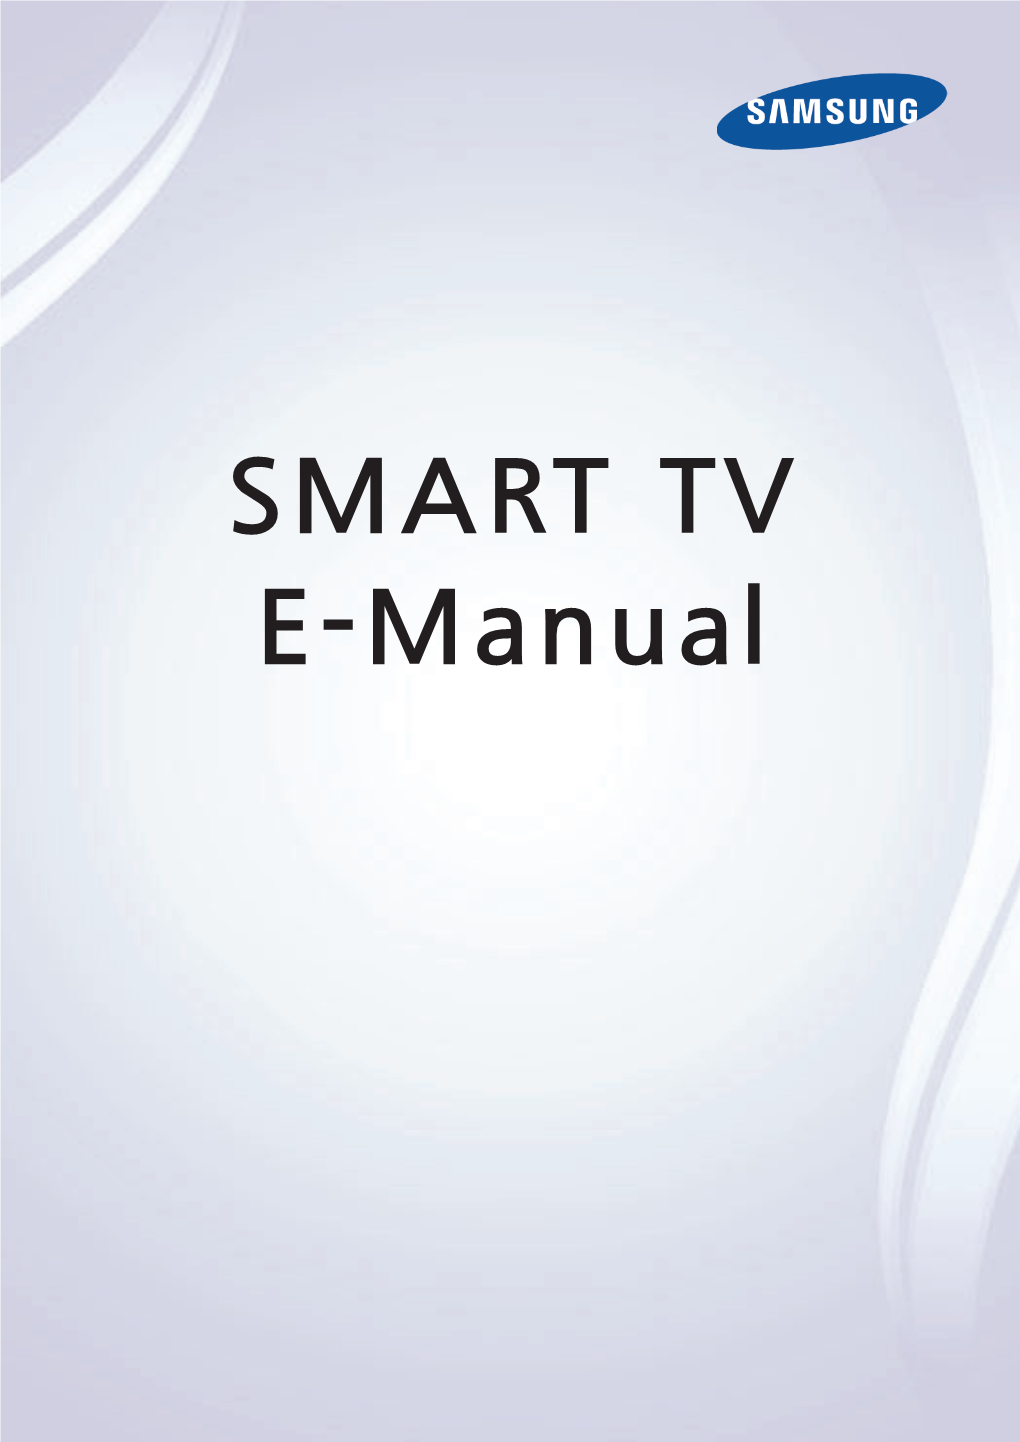 SMART TV E-Manual I